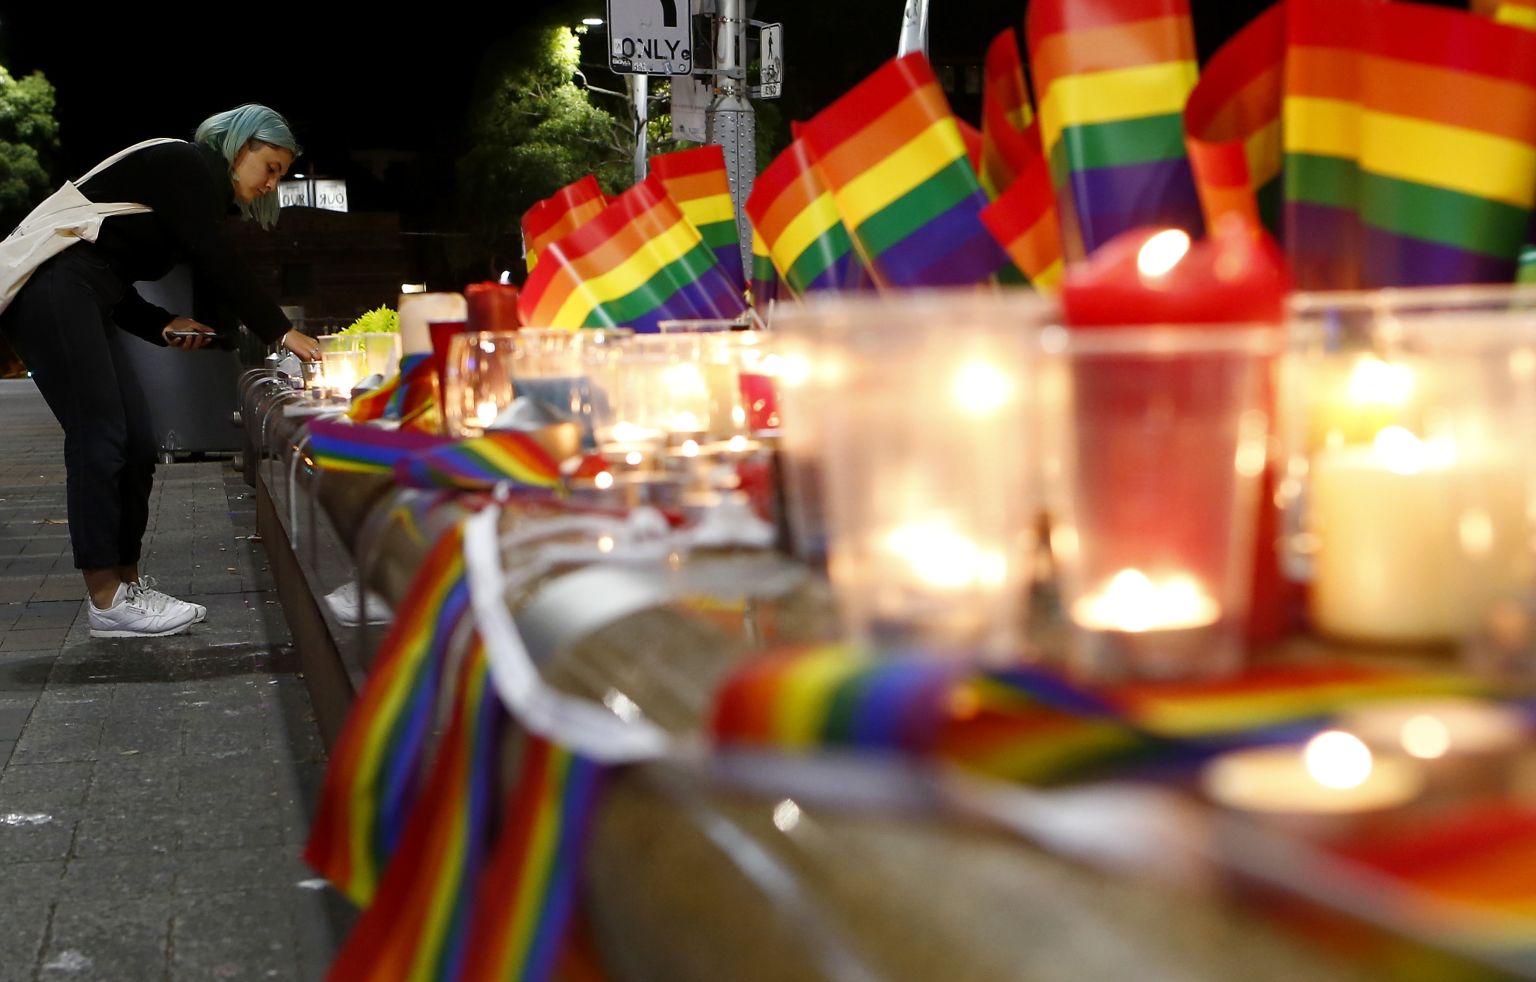 Columbus React To Methodist Church Upholding Ban On Gay Marriage